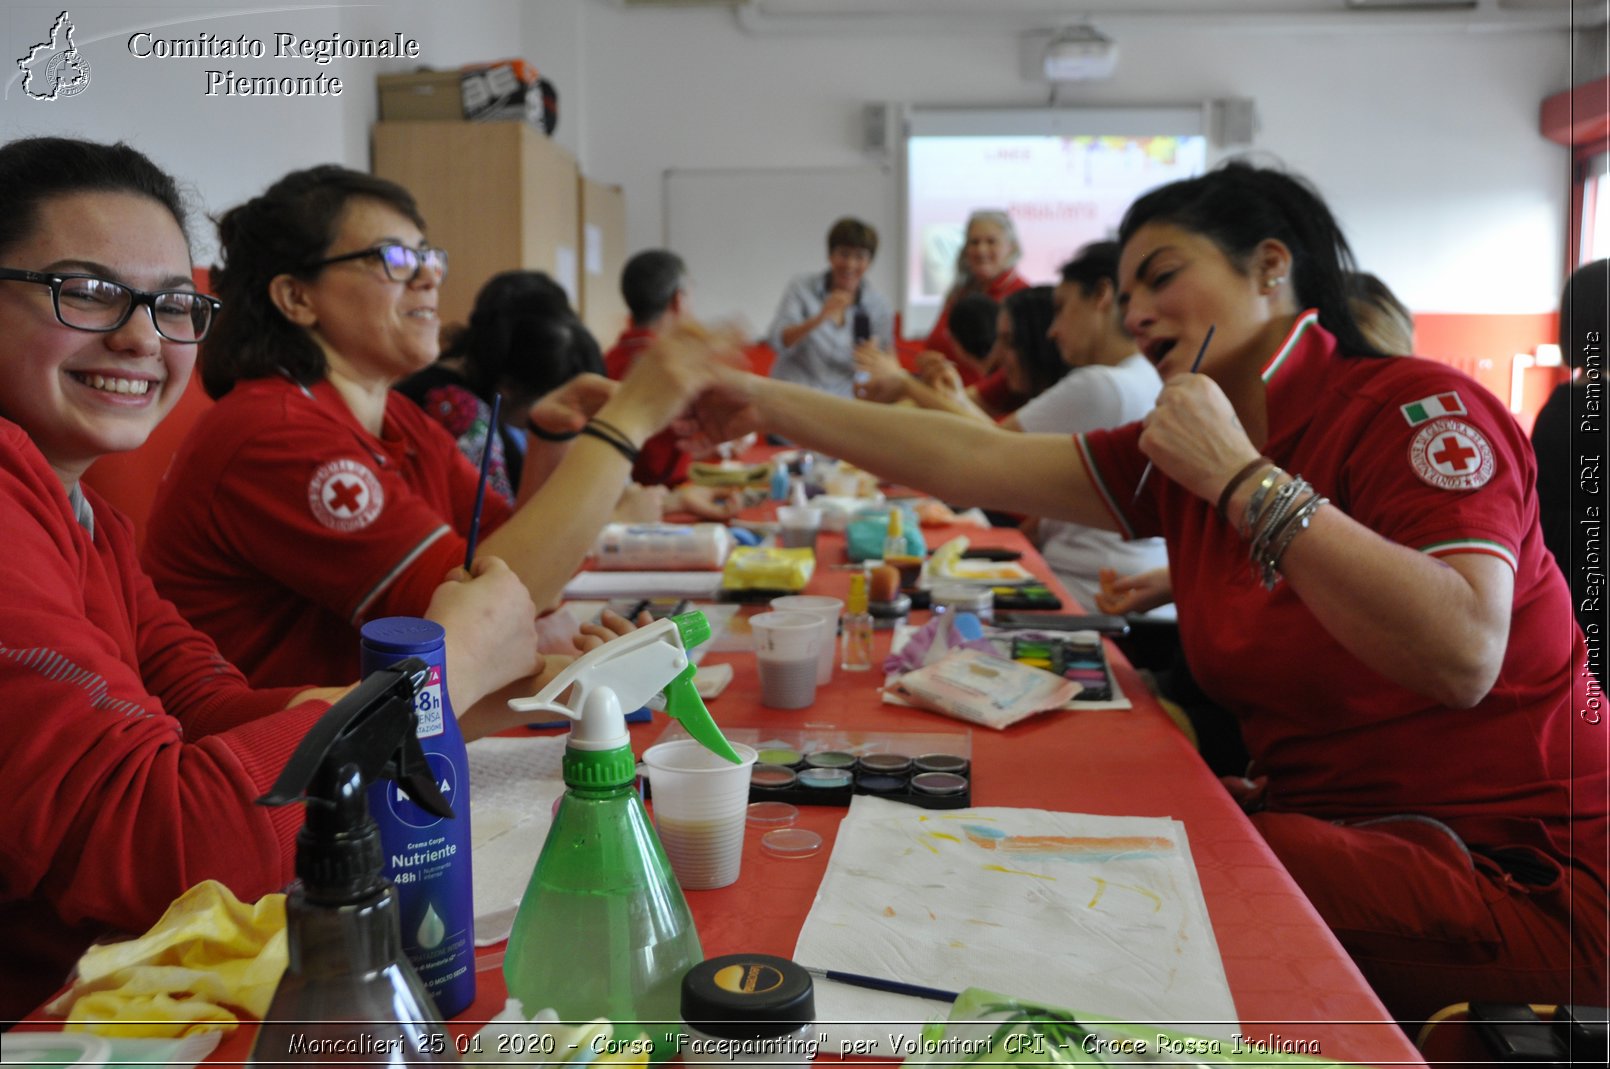 Moncalieri 25 01 2020 - Corso "Facepainting" per Volontari CRI - Croce Rossa Italiana